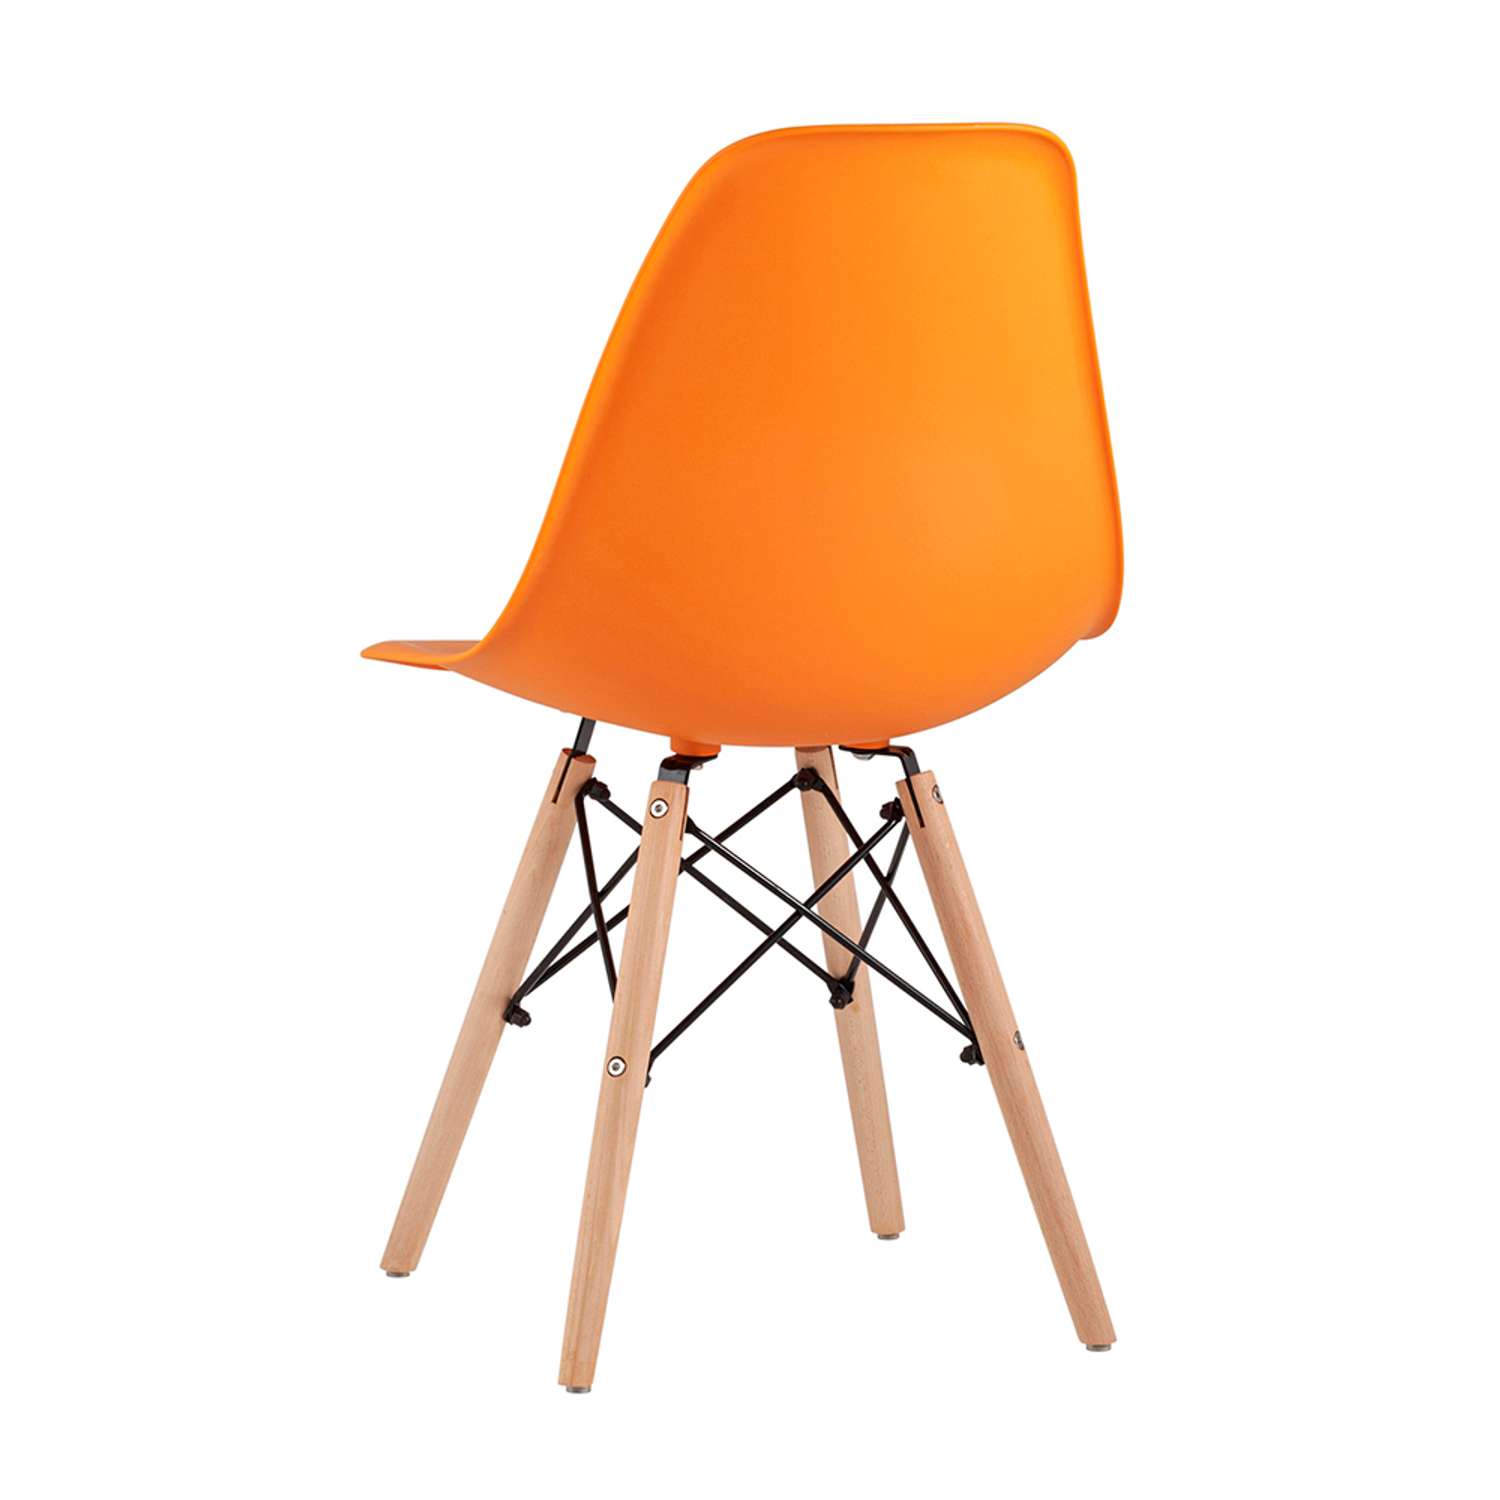 Комплект стульев Stool Group DSW Style оранжевый - фото 5